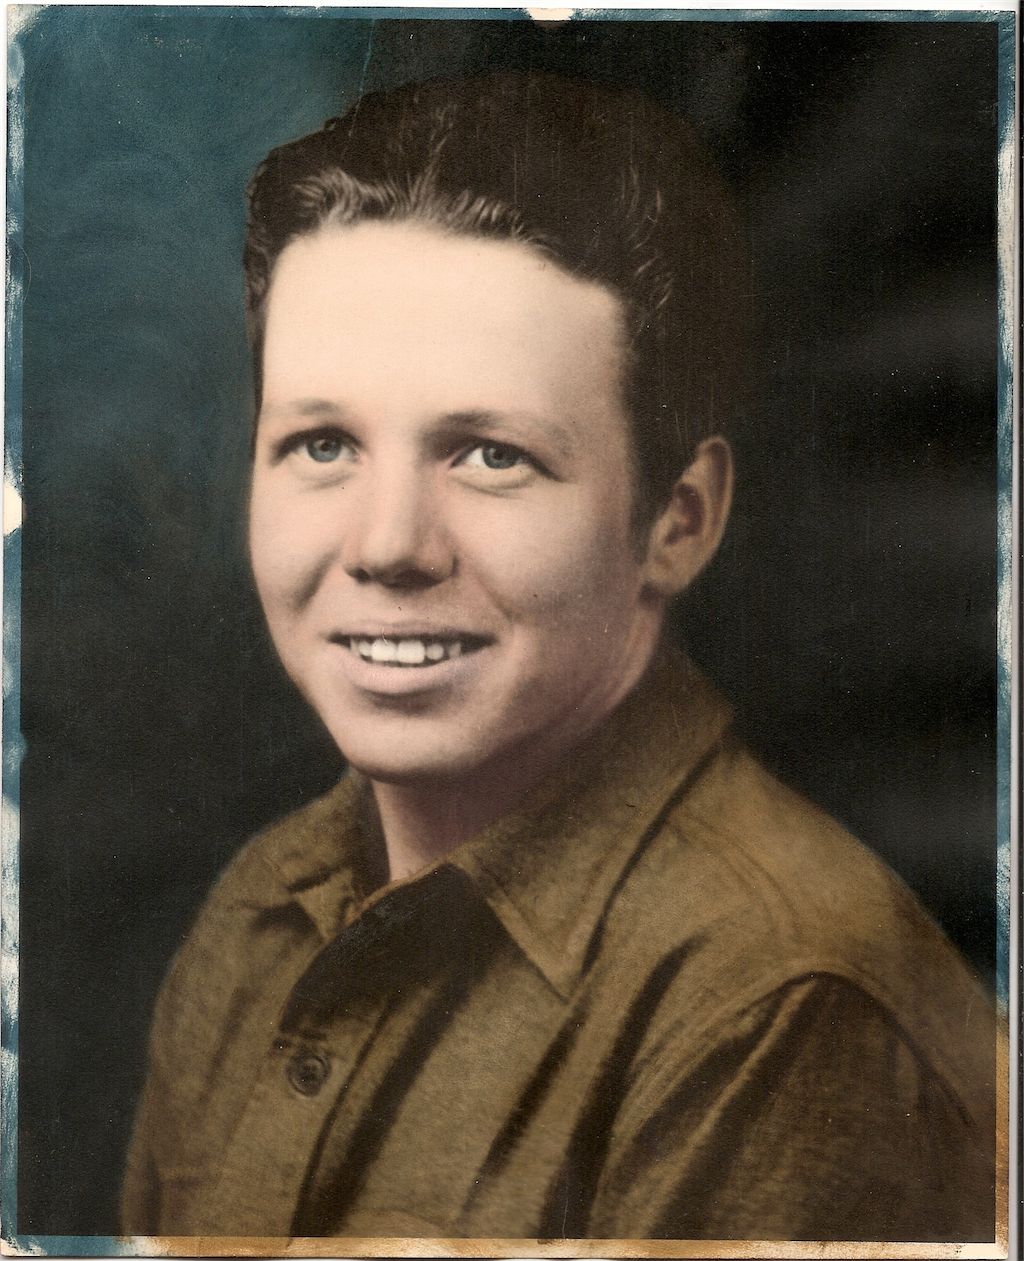 U.S. Army photo of Richard Rogers